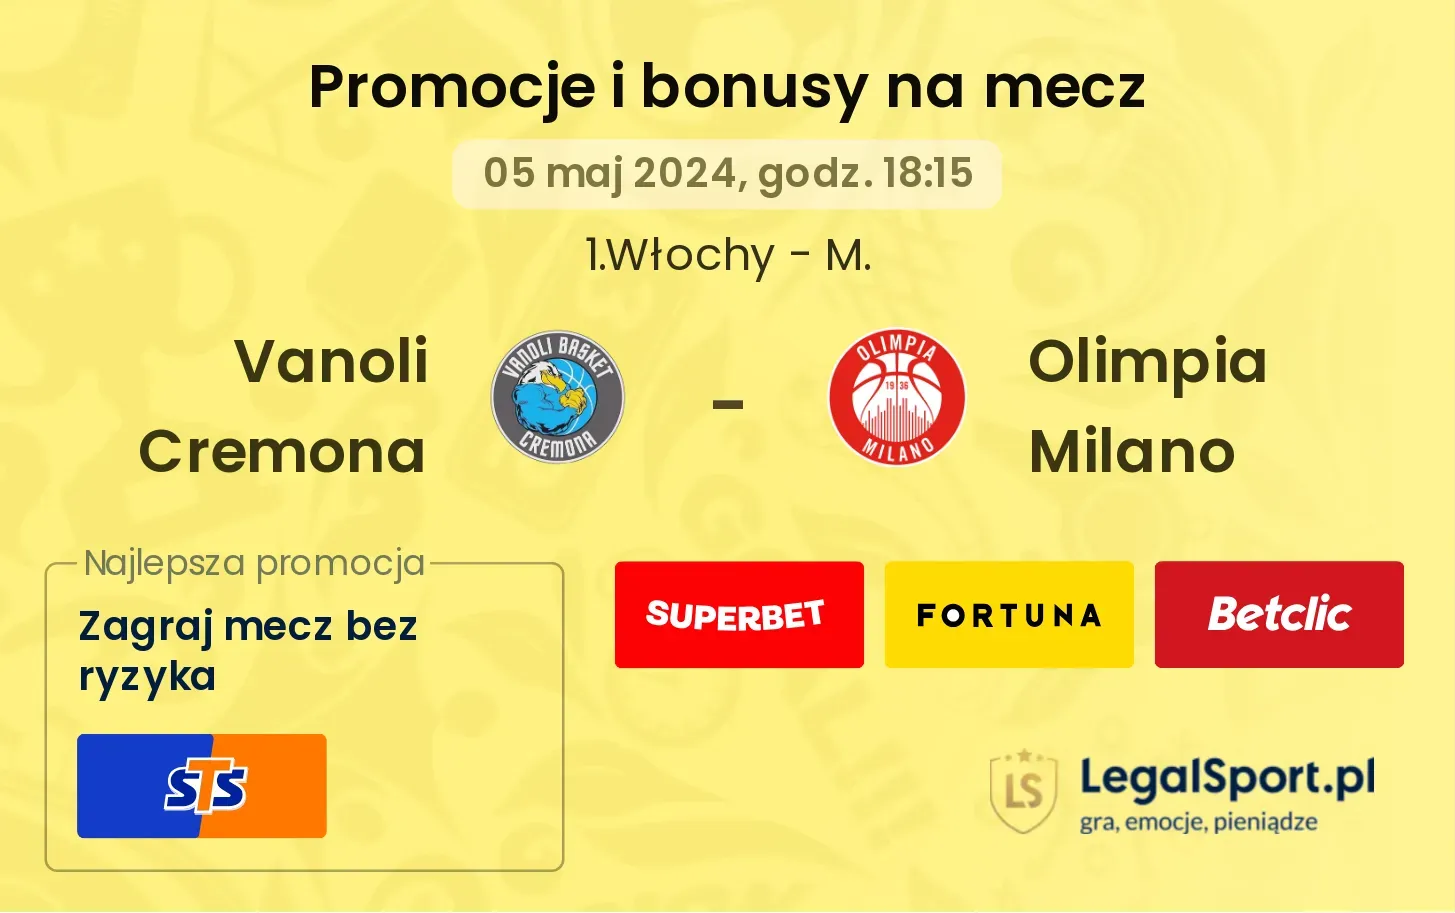 Vanoli Cremona - Olimpia Milano promocje bonusy na mecz